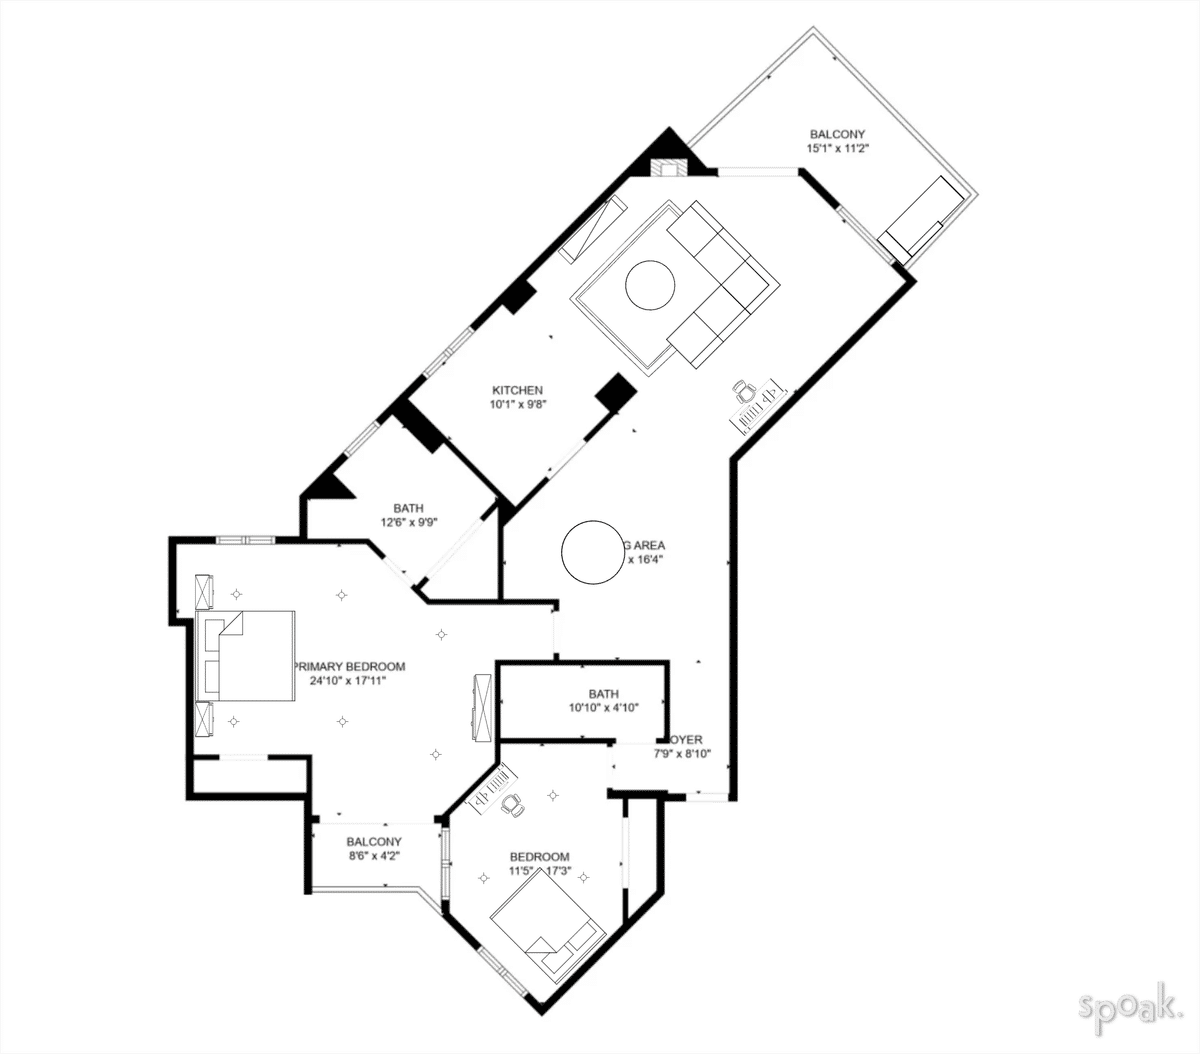 Multi Story Apartment Floor Plan designed by Julia Quayle